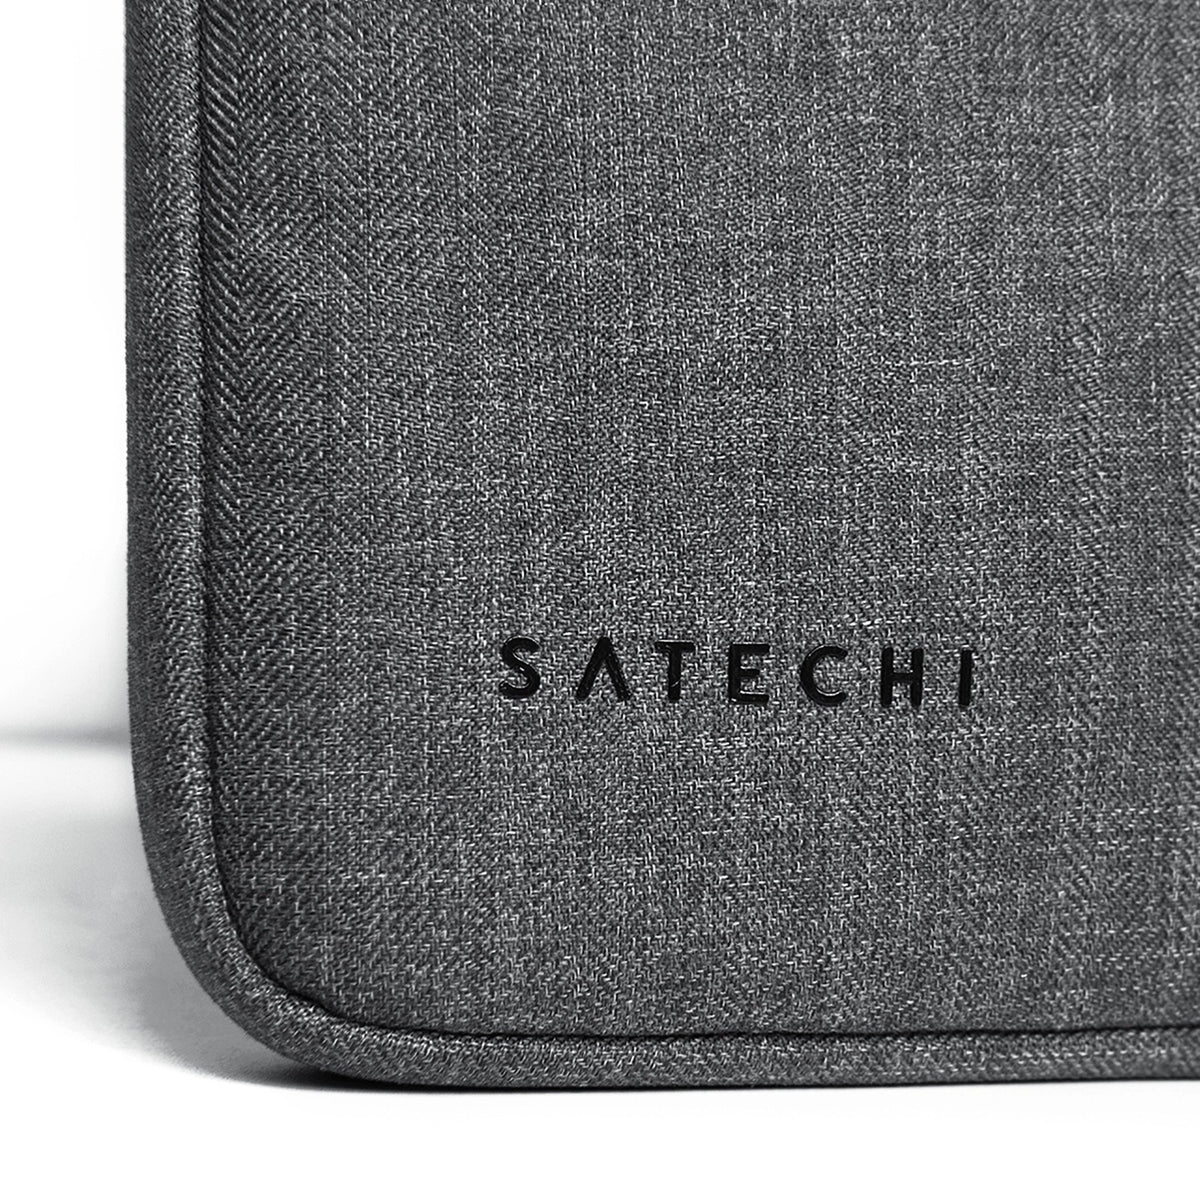 Satechi Laptop Carrying Bag